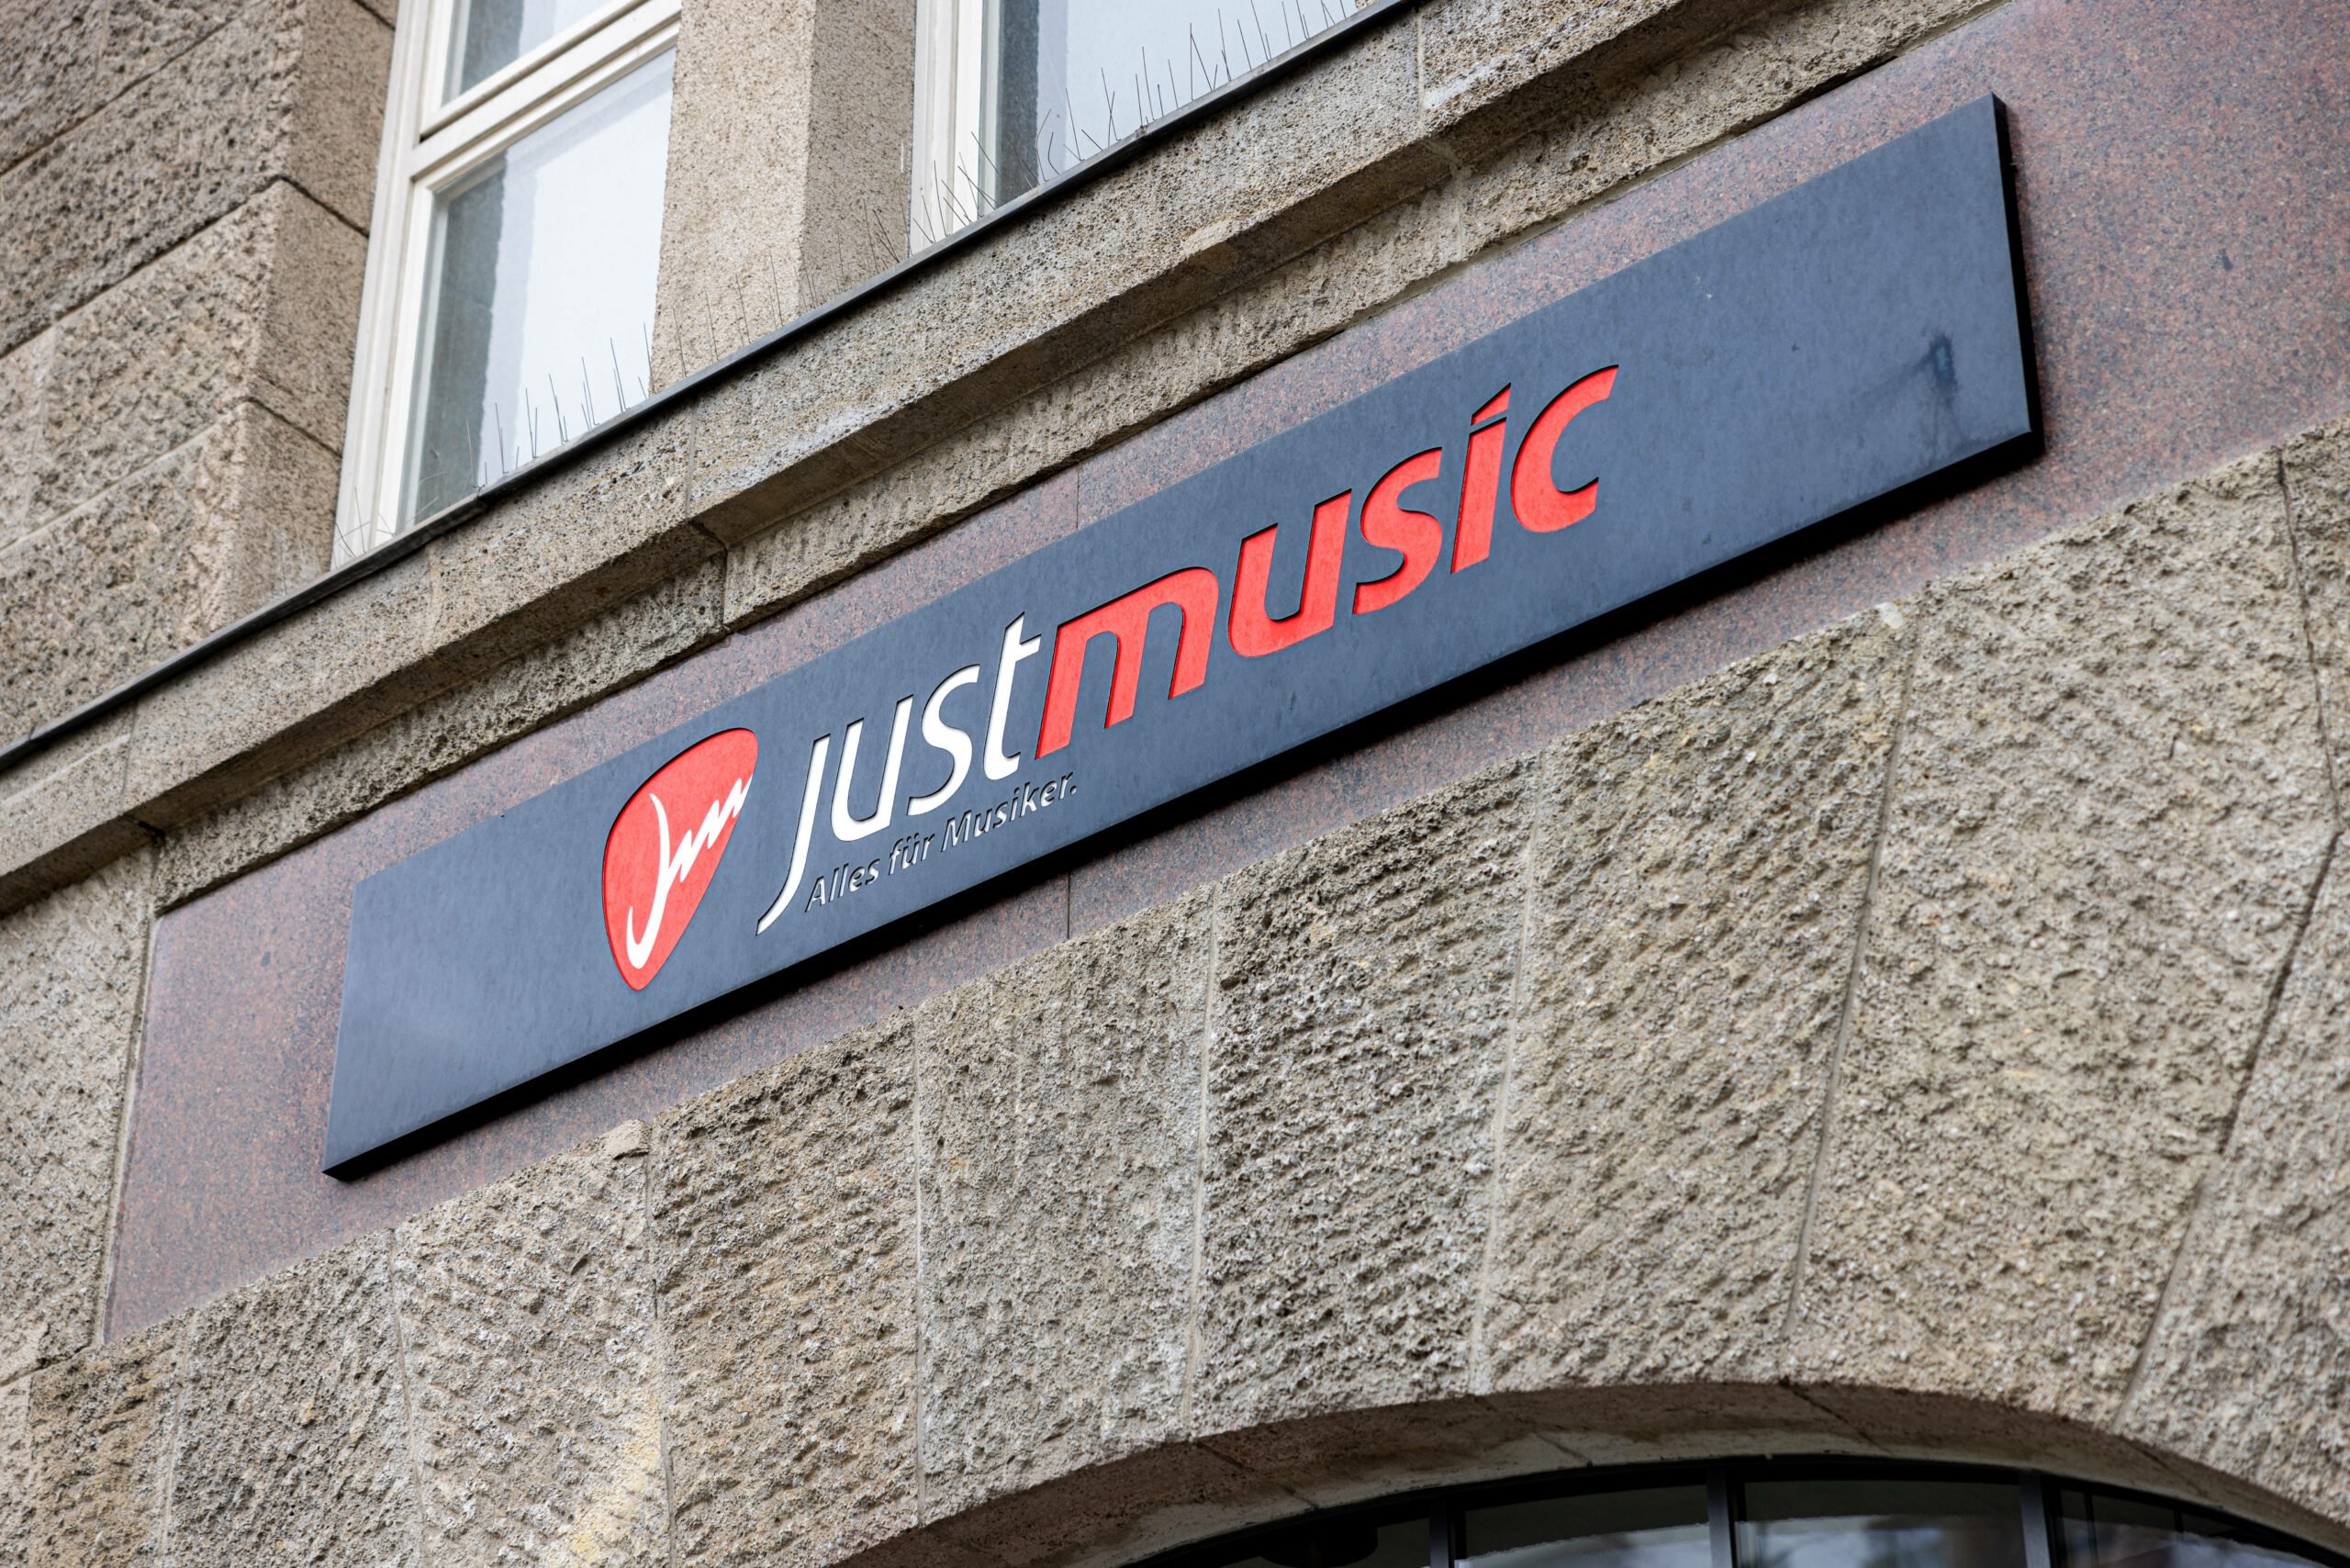 Schliessung des Kreuzberger Musikkaufhauses JustMusic. Foto: Imago/Achille Abboud